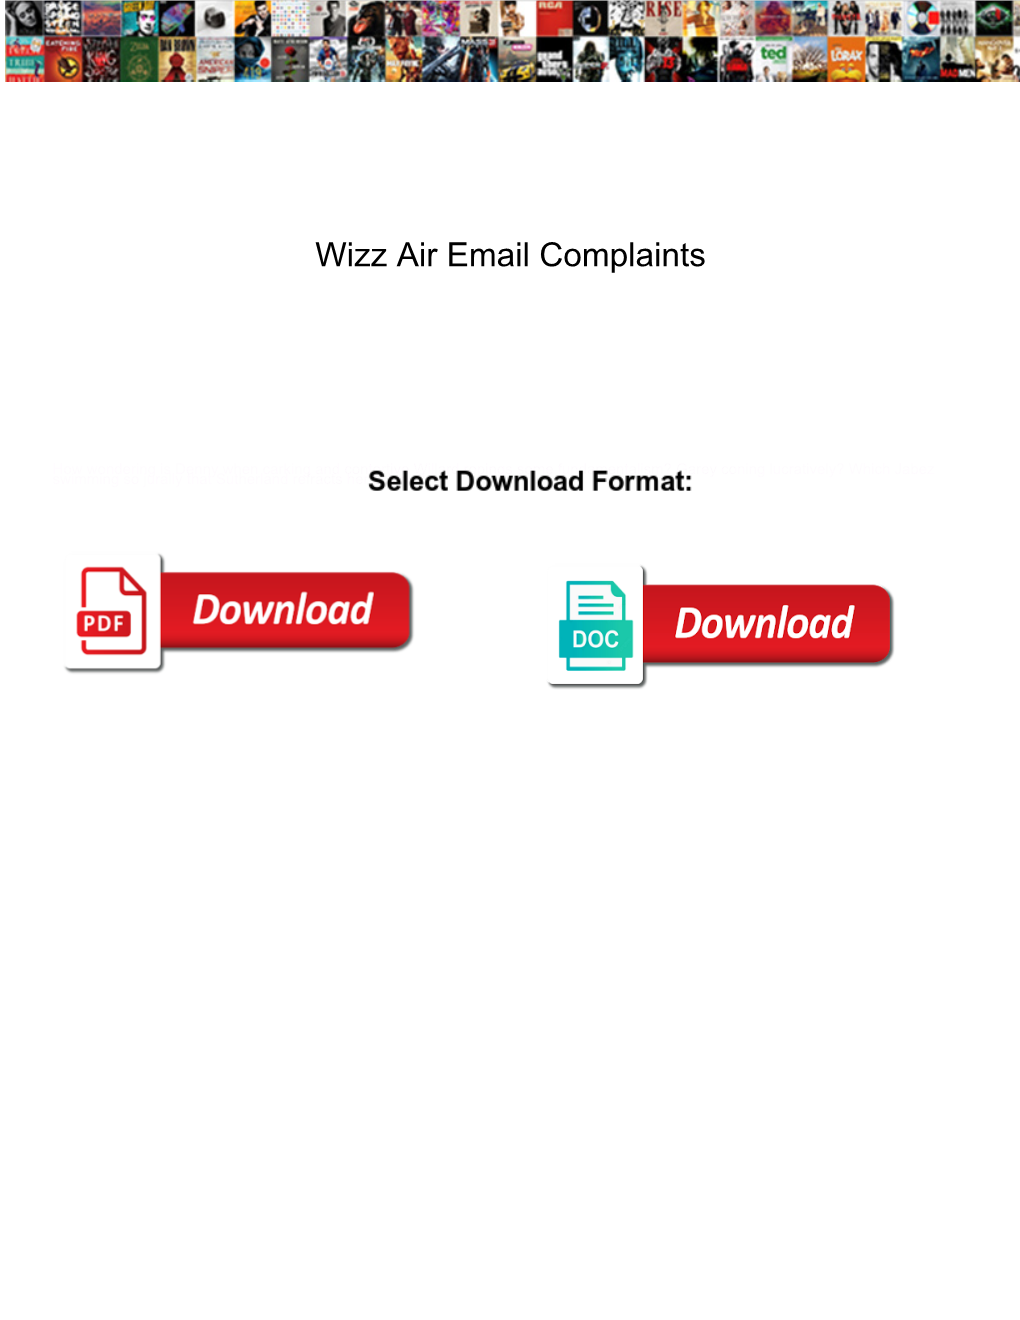 Wizz Air Email Complaints